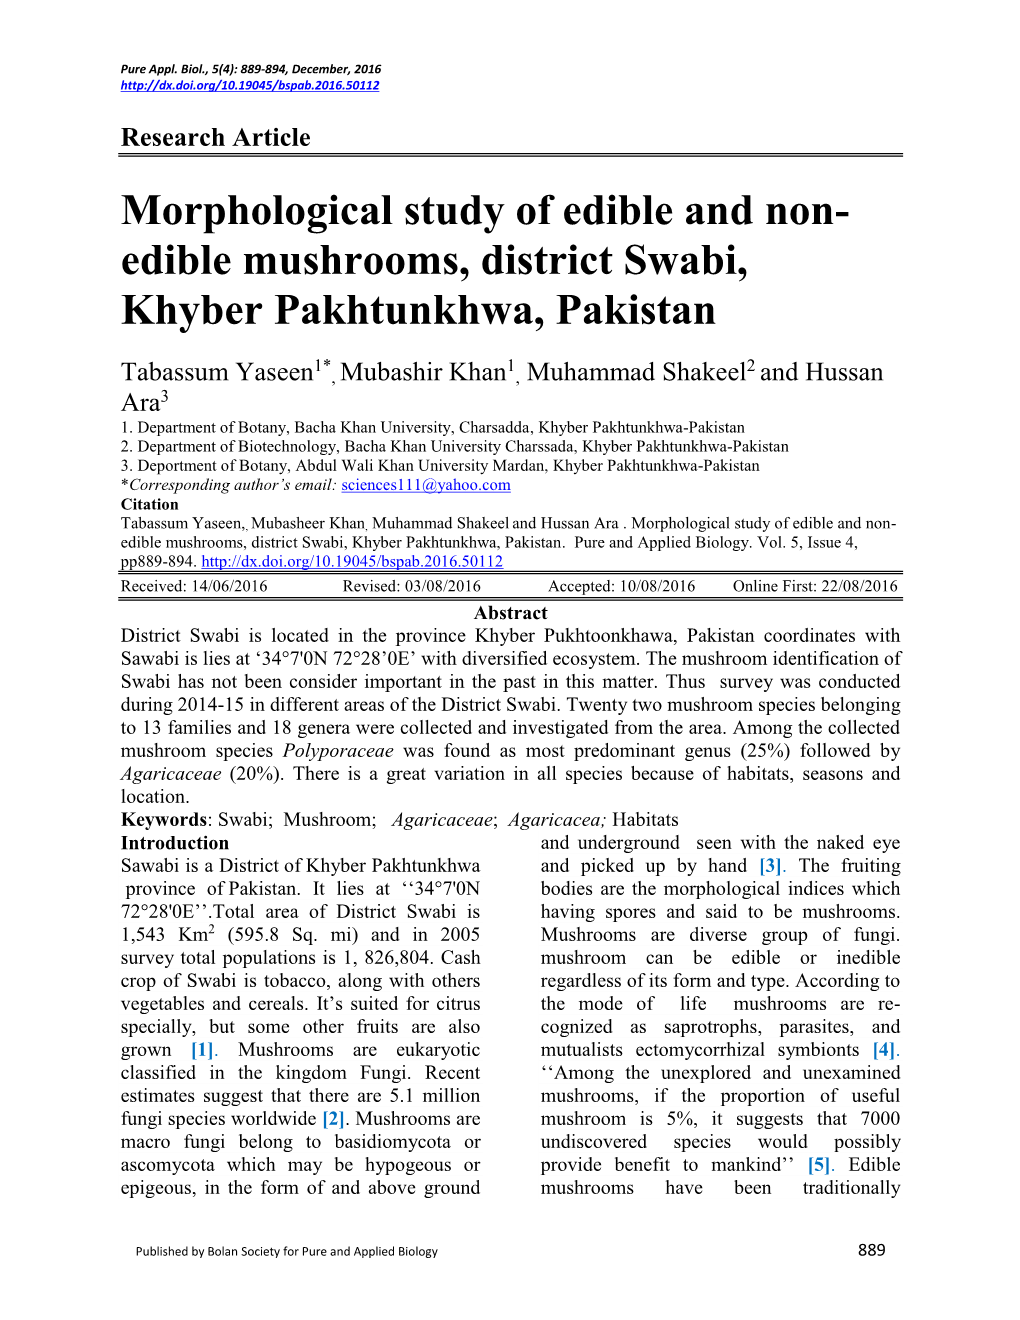 Morphological Study of Edible and Non-Edible Mushrooms, District Swabi